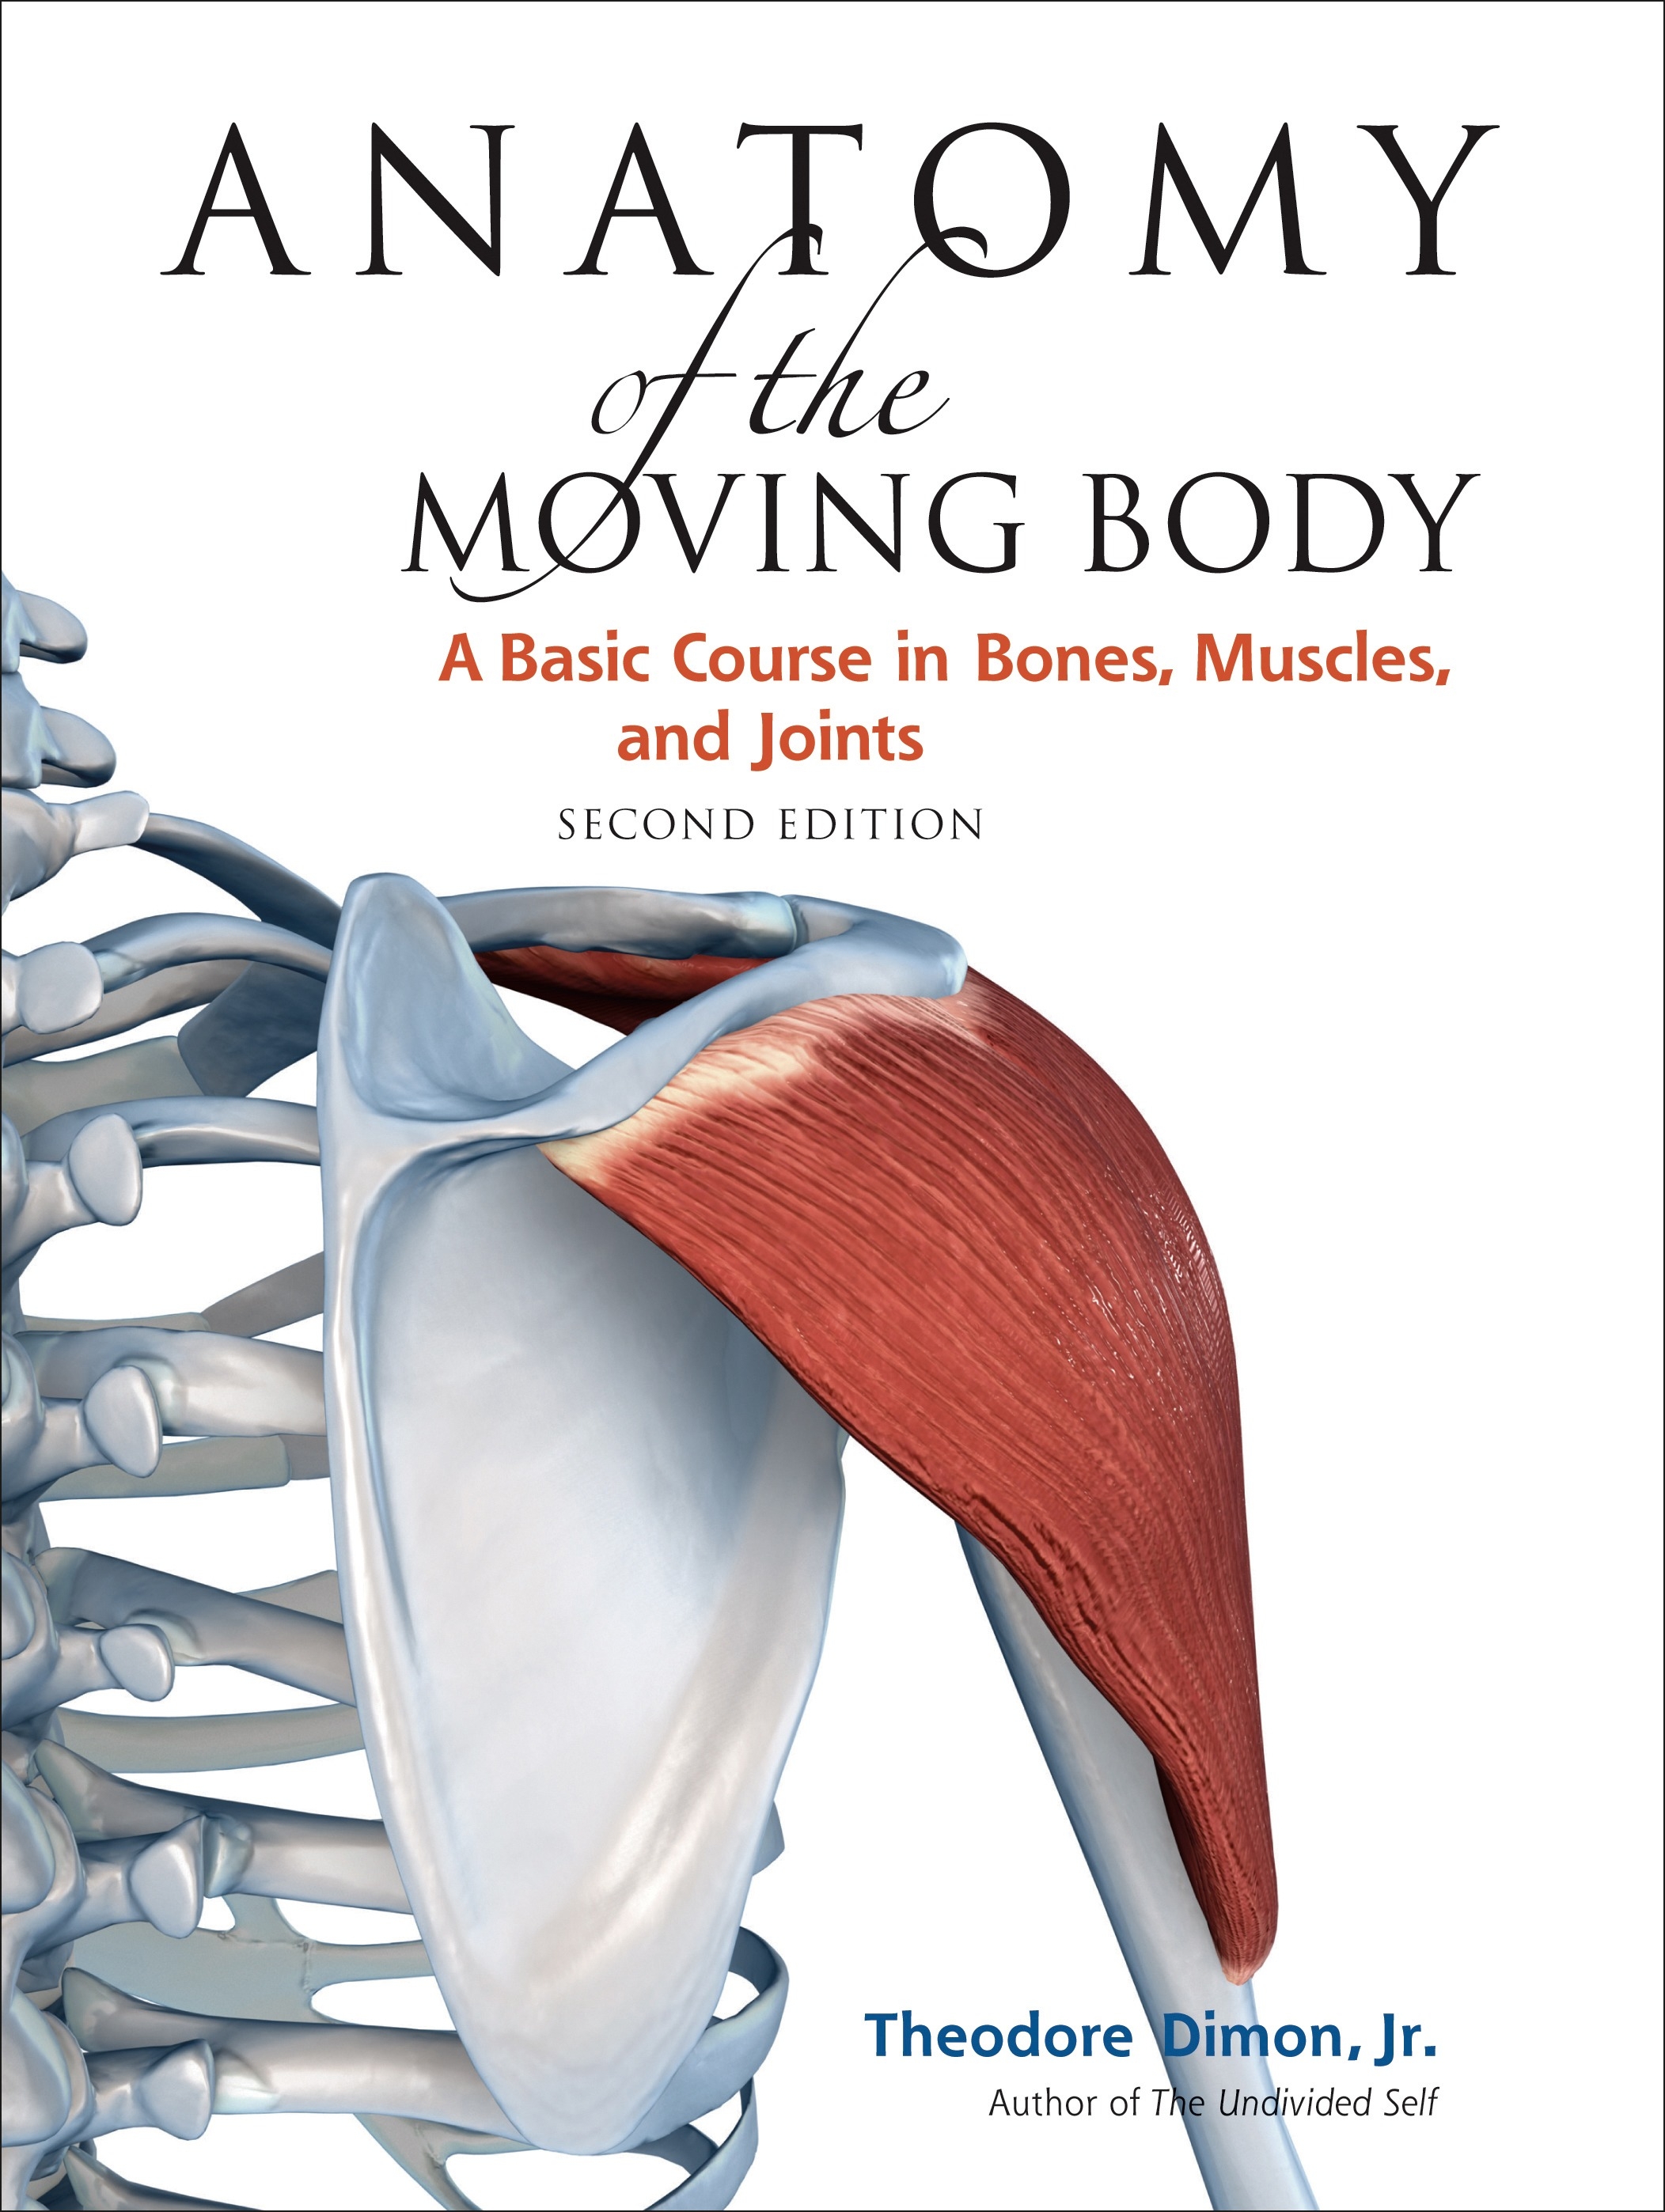 Anatomy Of The Moving Body by Theodore Dimon - Penguin Books Australia